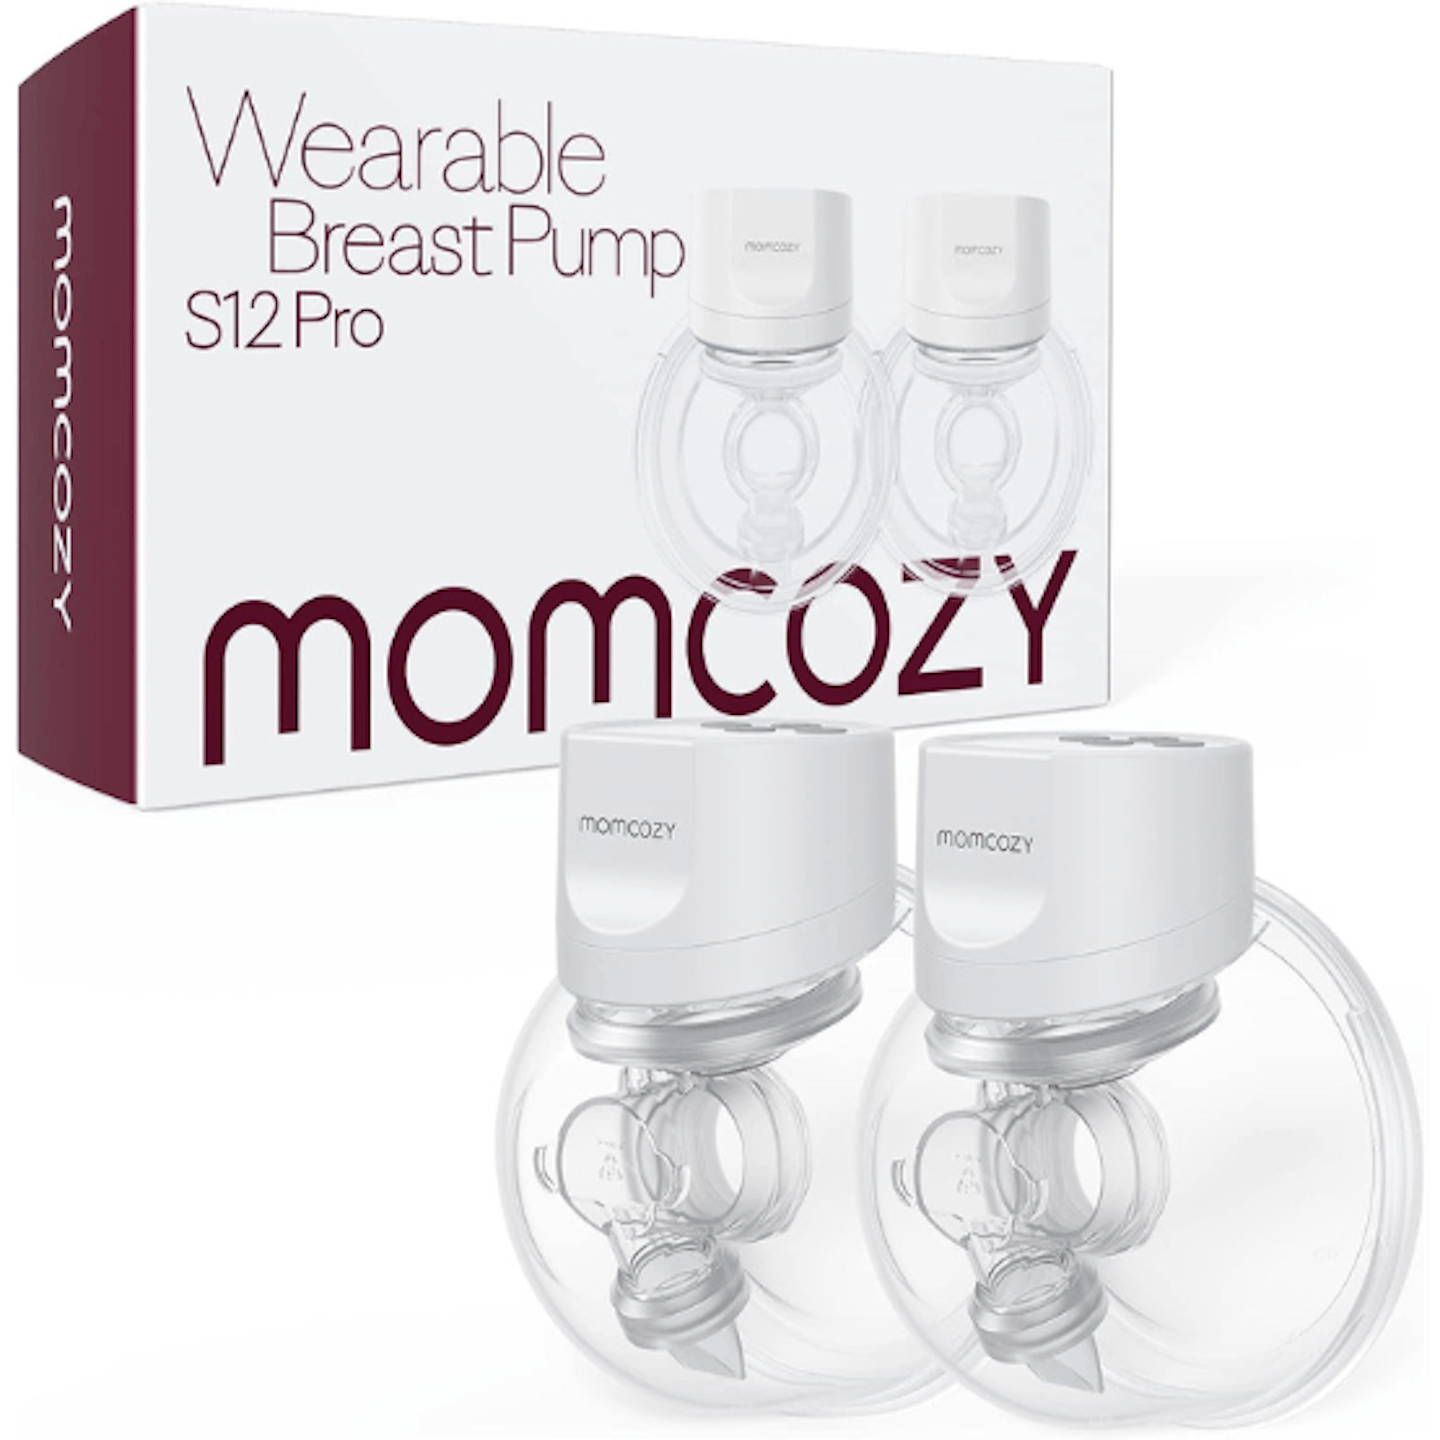 Best breast pumps momcozy S12 pro